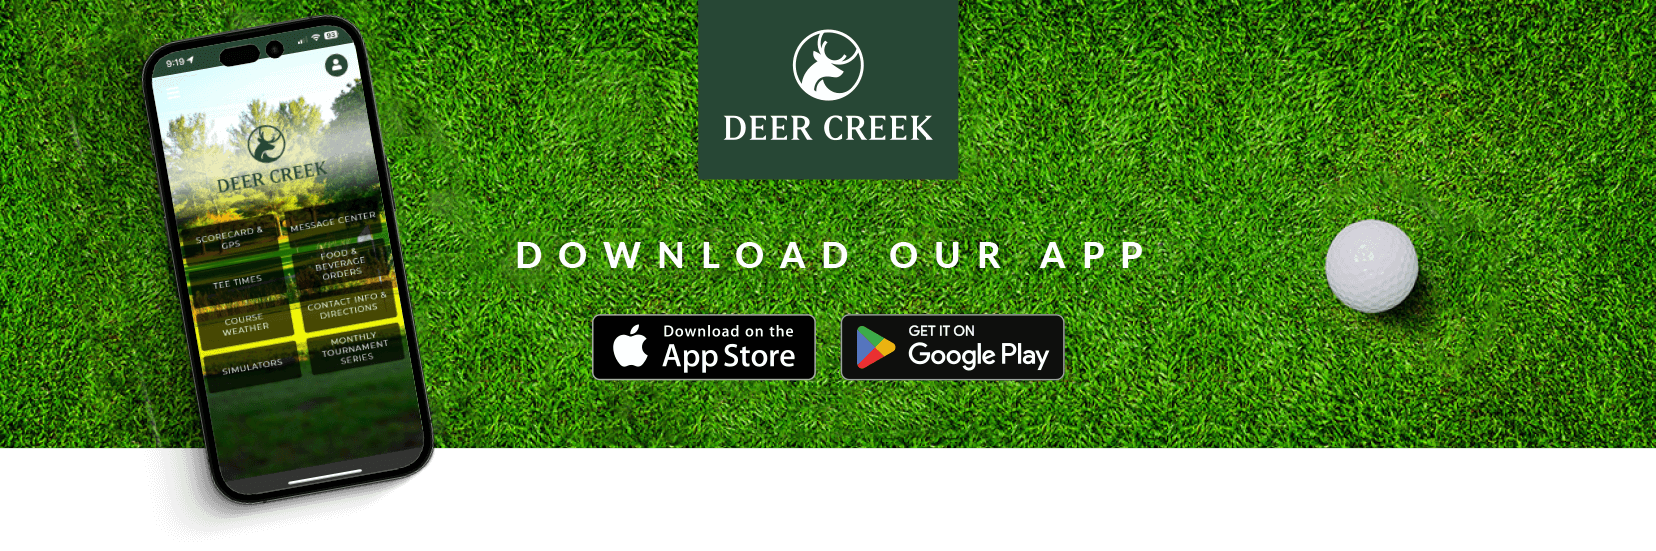 Deer Creek App